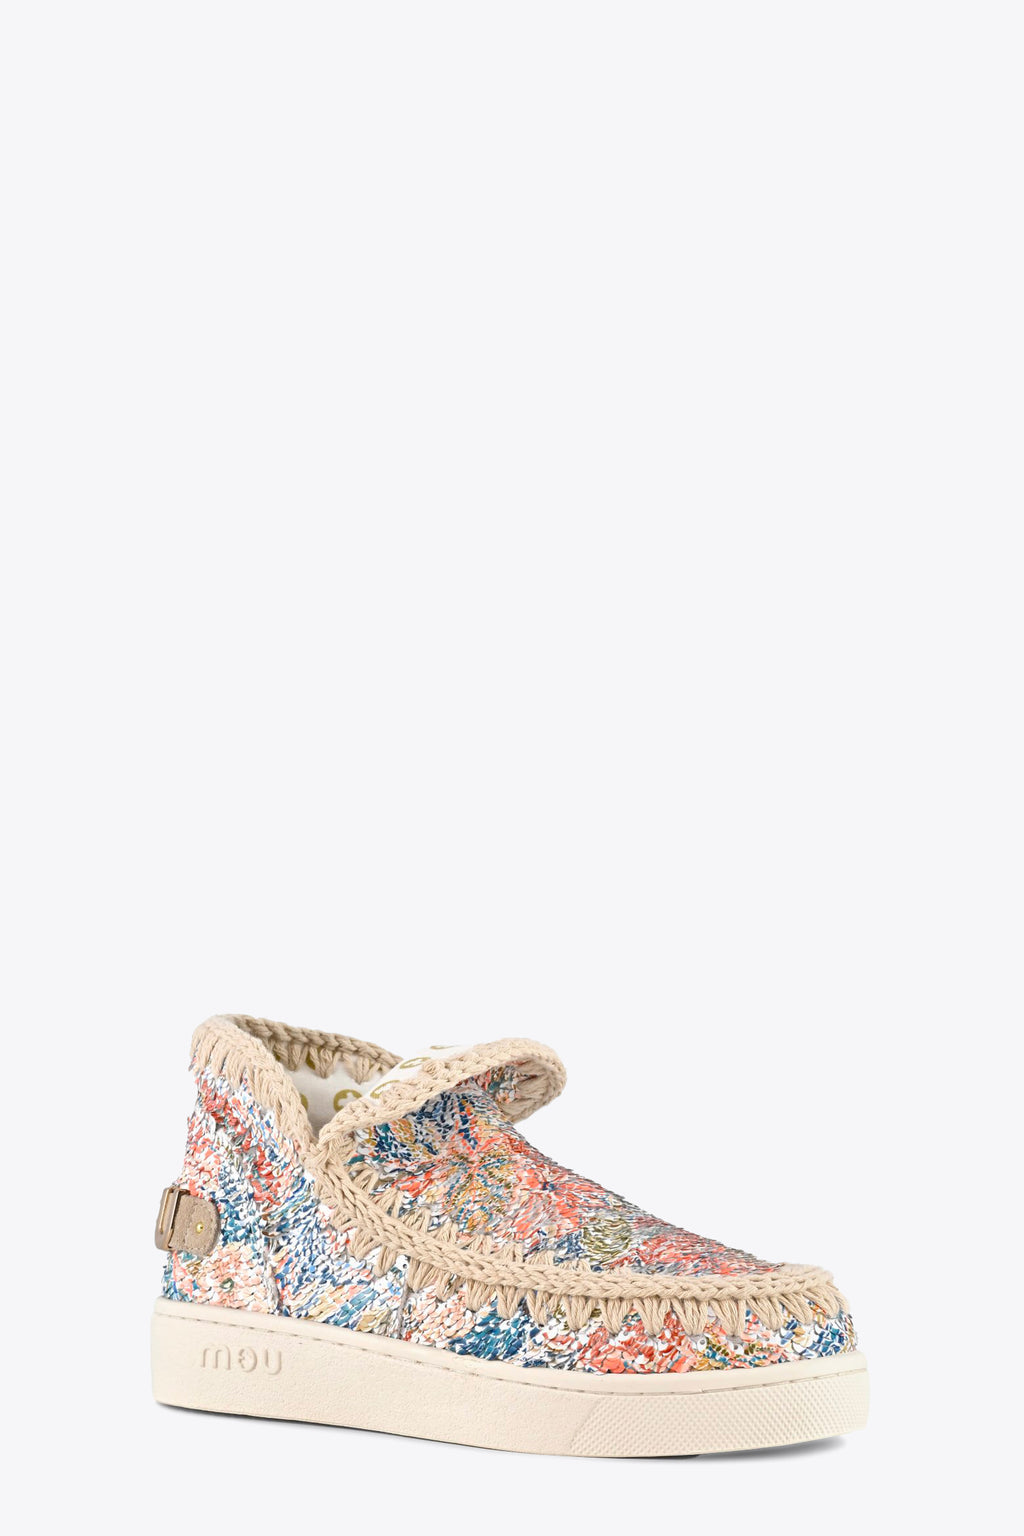 alt-image__Sneaker-slip-on-in-paillettes-multicolor---Summer-eskimo-sneaker-printed-sequins